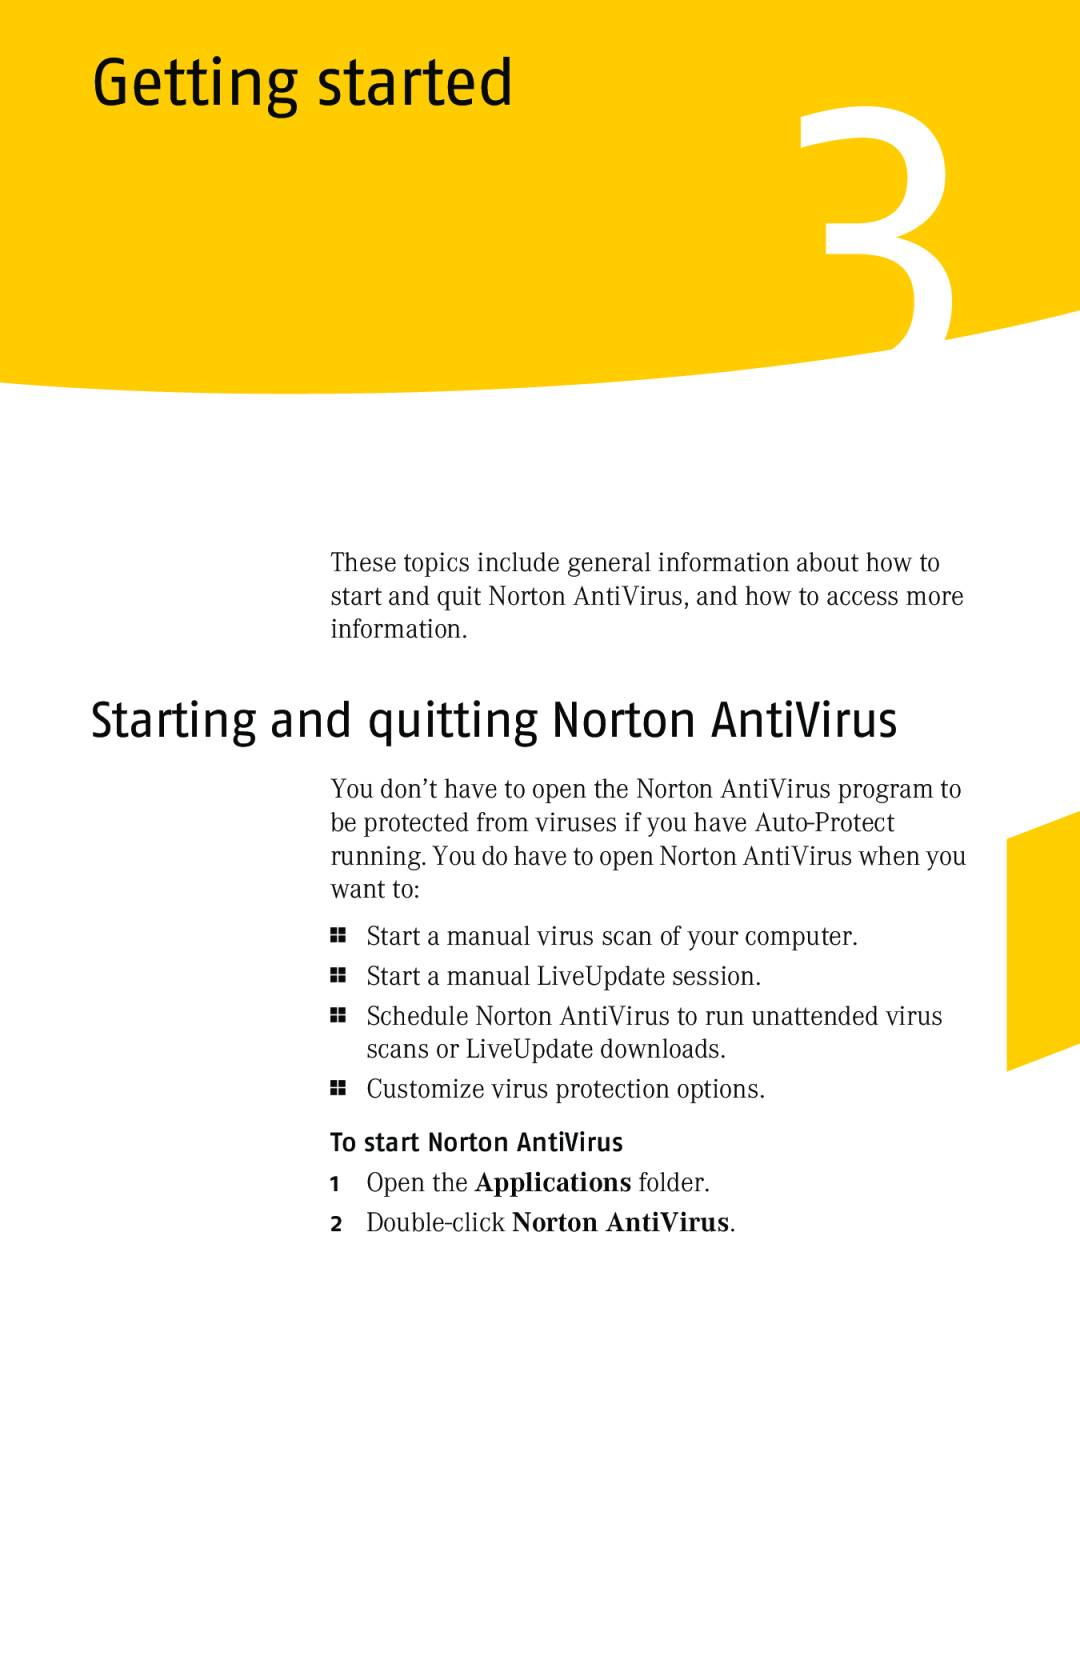 Symantec 10 manual Getting started, Starting and quitting Norton AntiVirus, 2Double-click Norton AntiVirus 